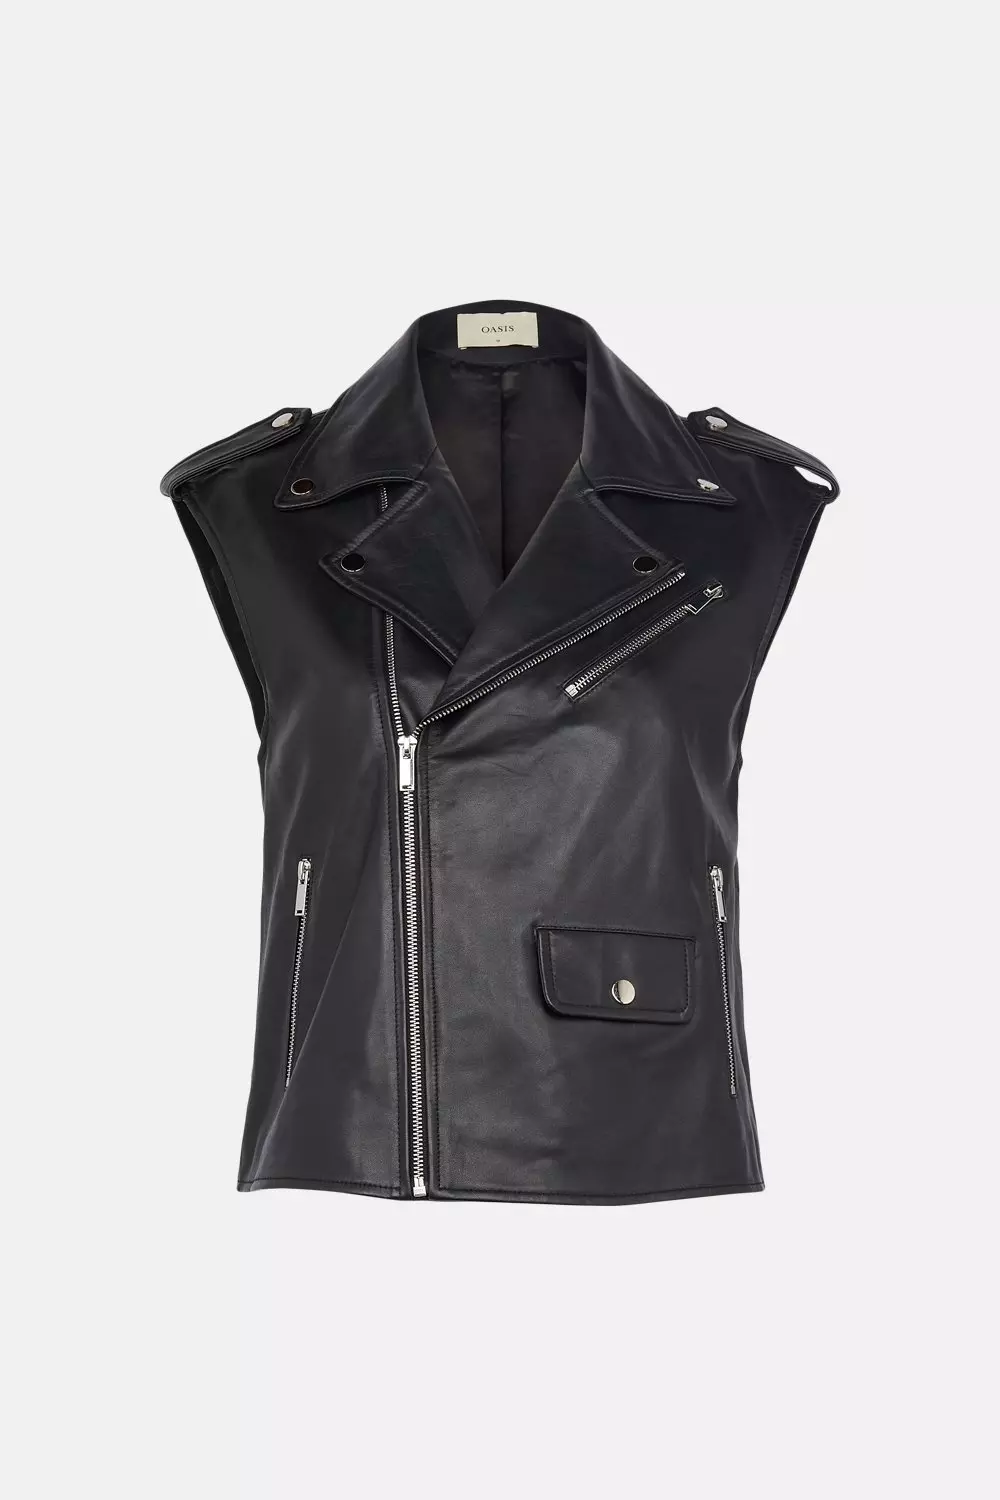 Stradivarius faux leather longline sleeveless biker jacket with belt in  black